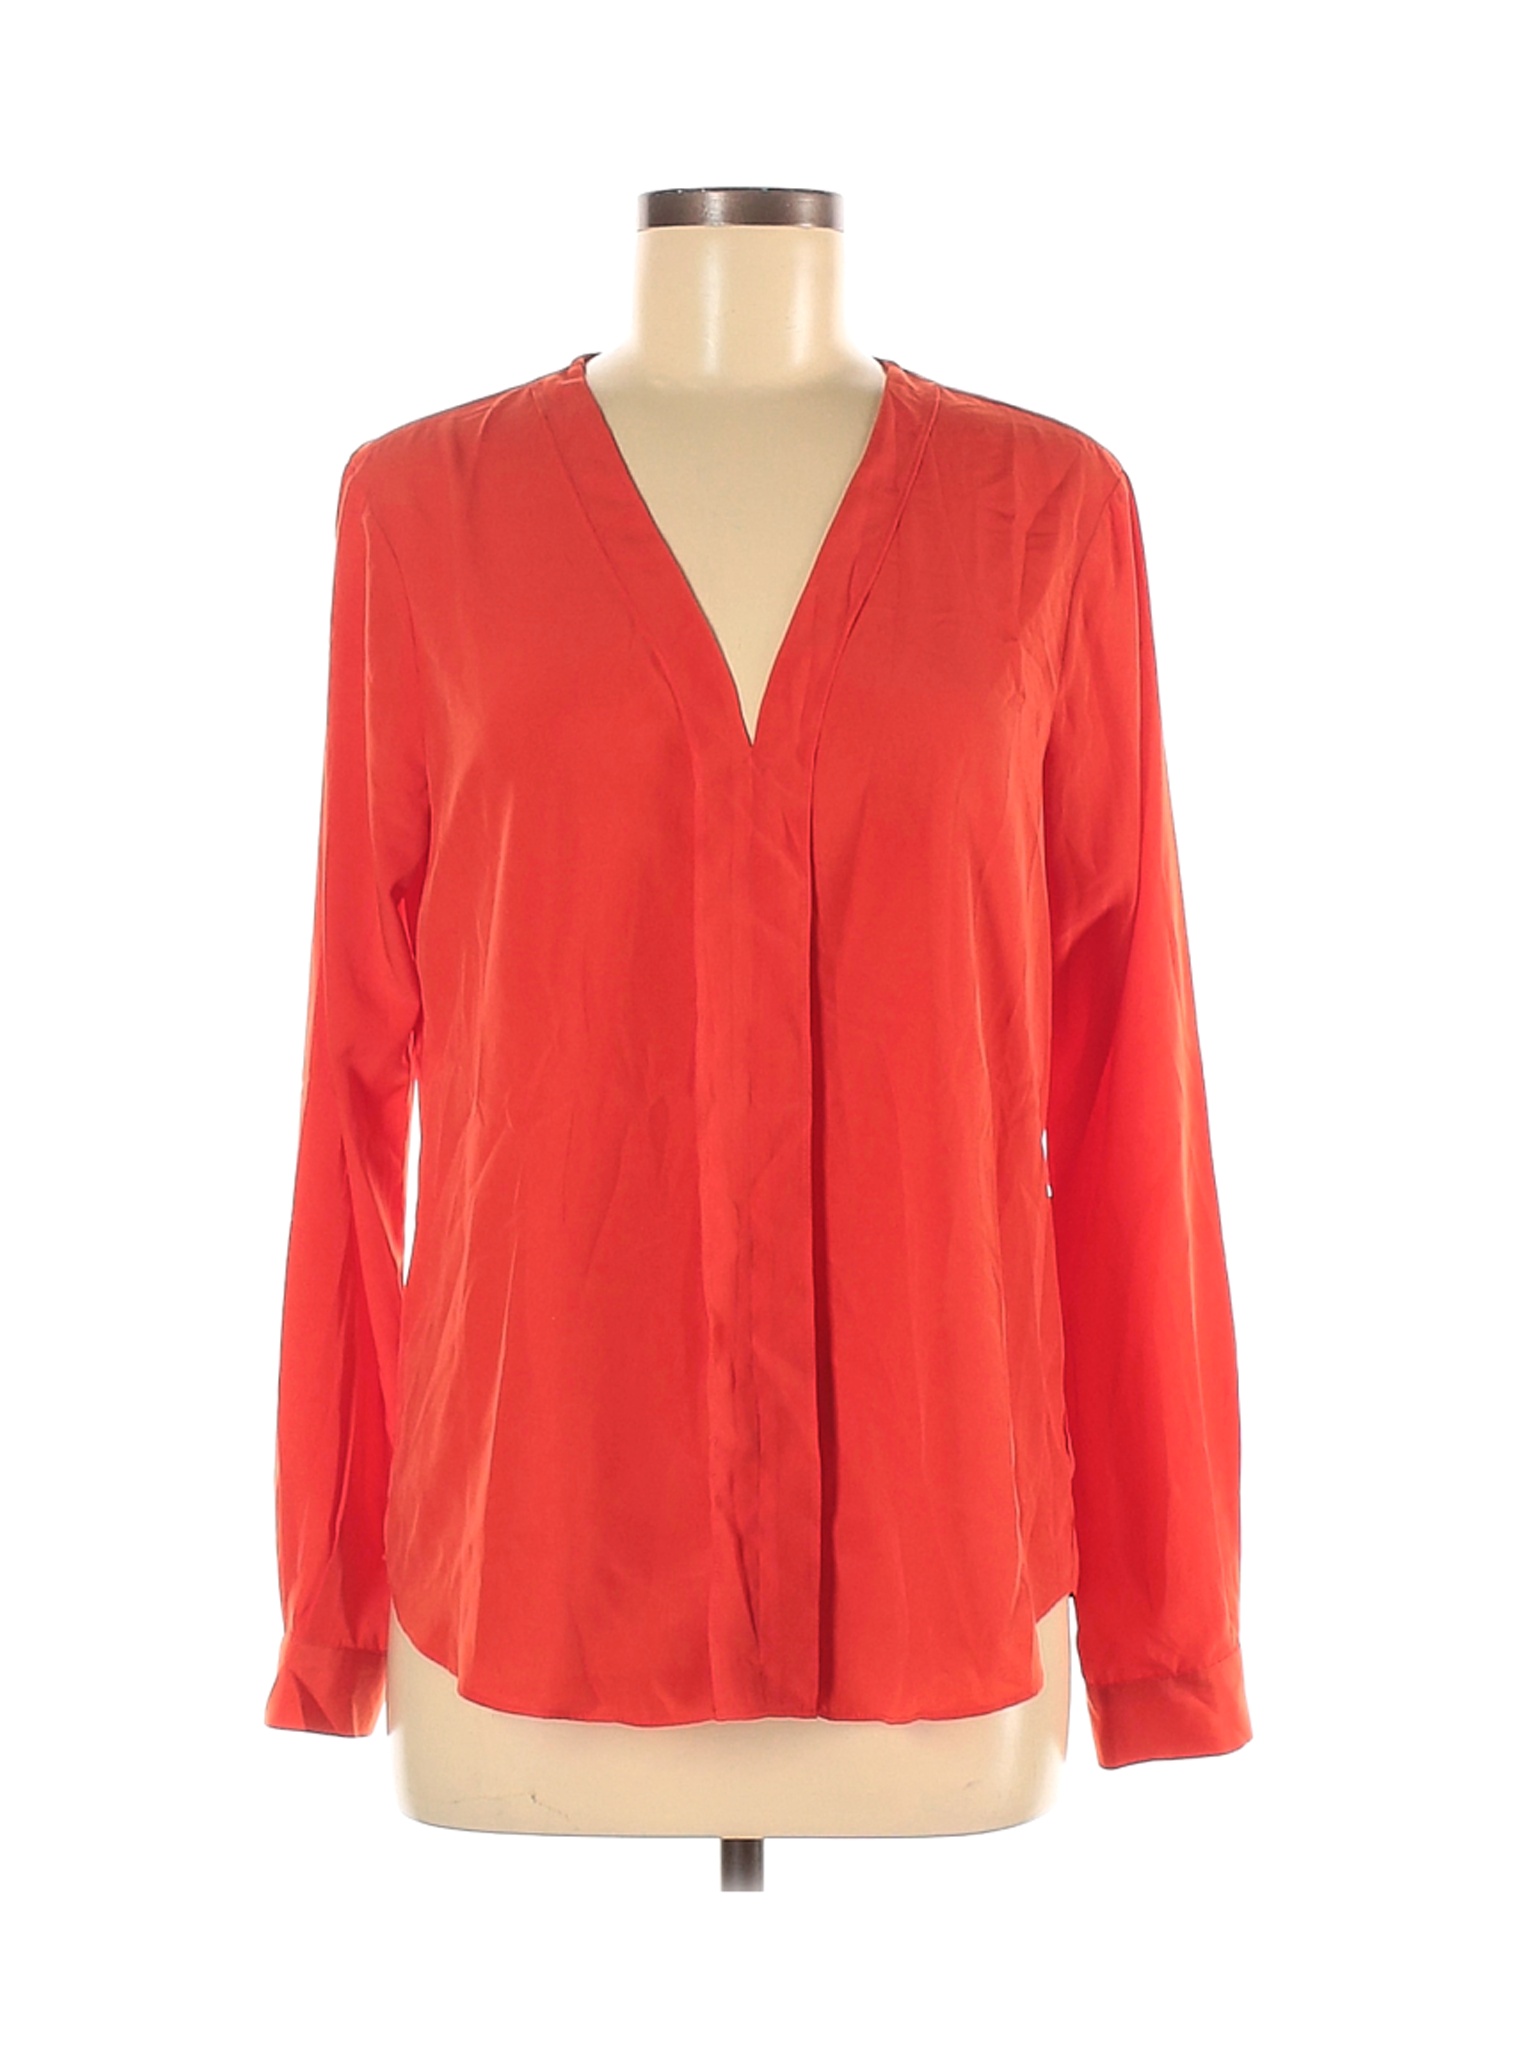 Yoana Baraschi Women Orange Long Sleeve Blouse M | eBay